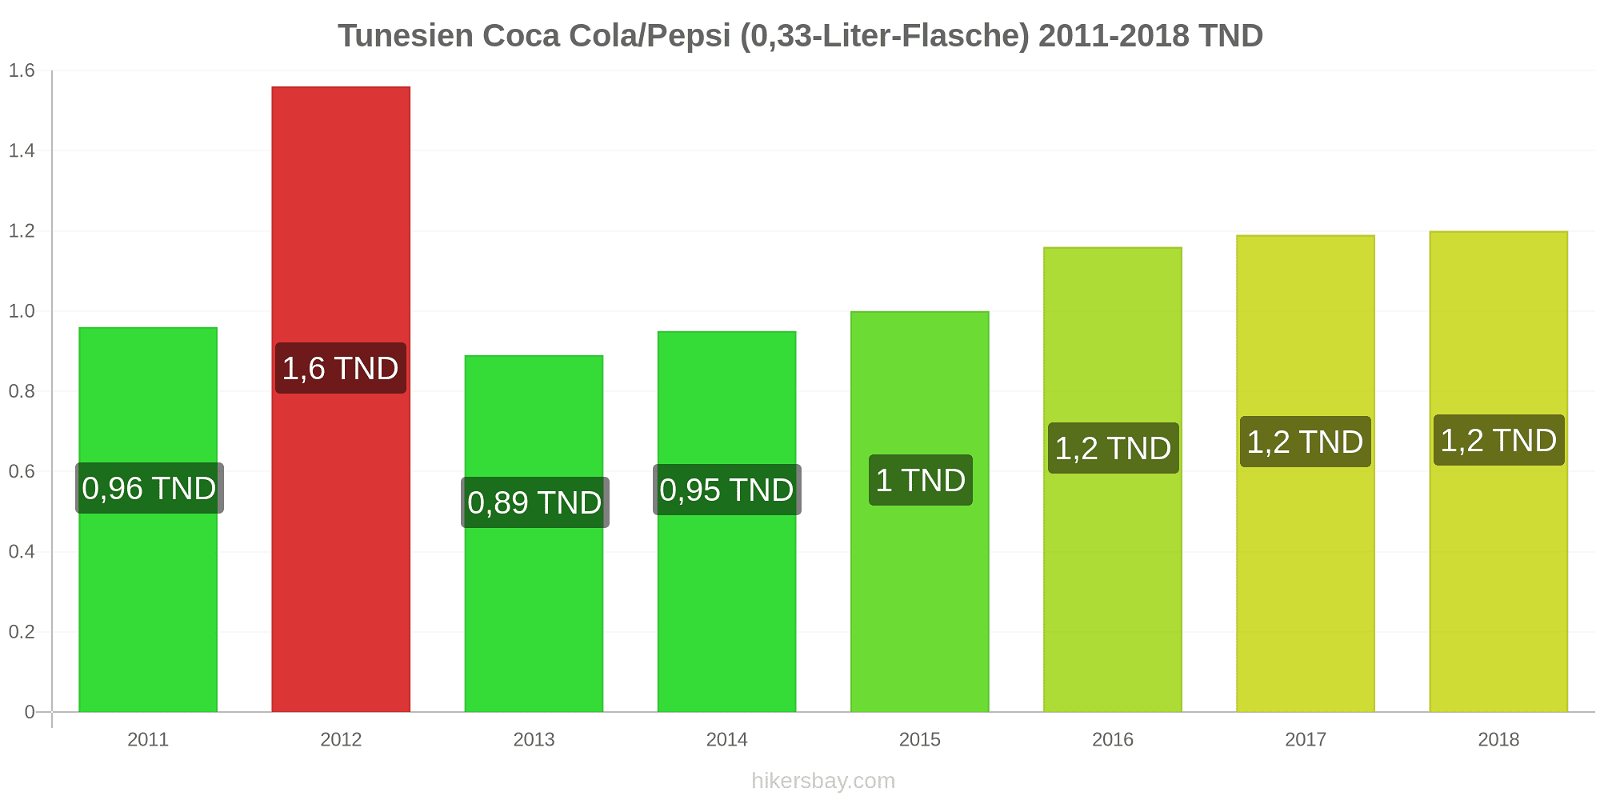 Tunesien Preisänderungen Coke/Pepsi (0,33-Liter-Flasche) hikersbay.com